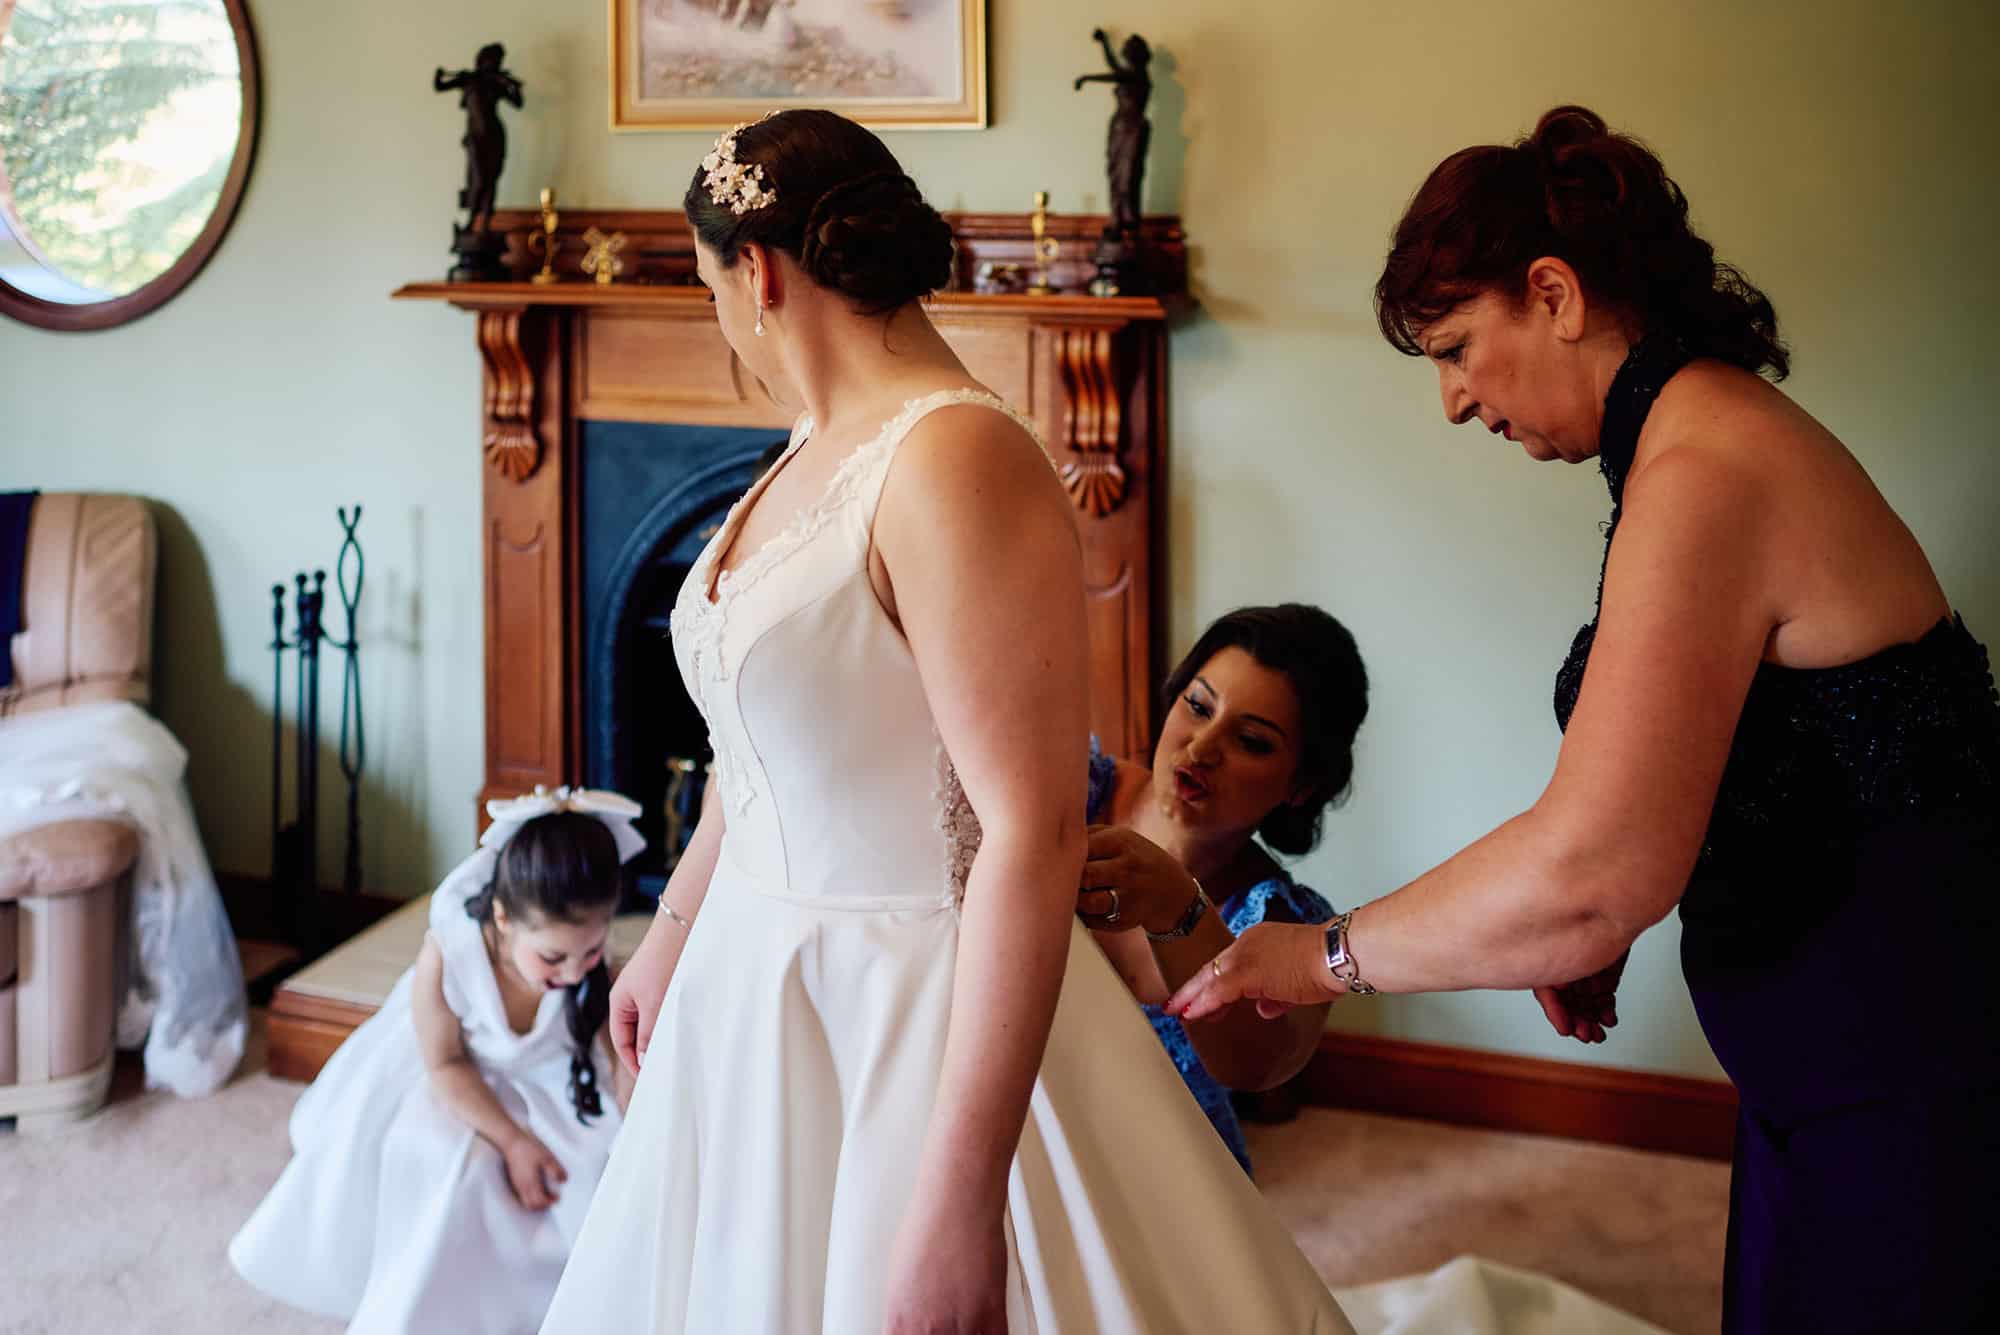 Helping the bride get dressed